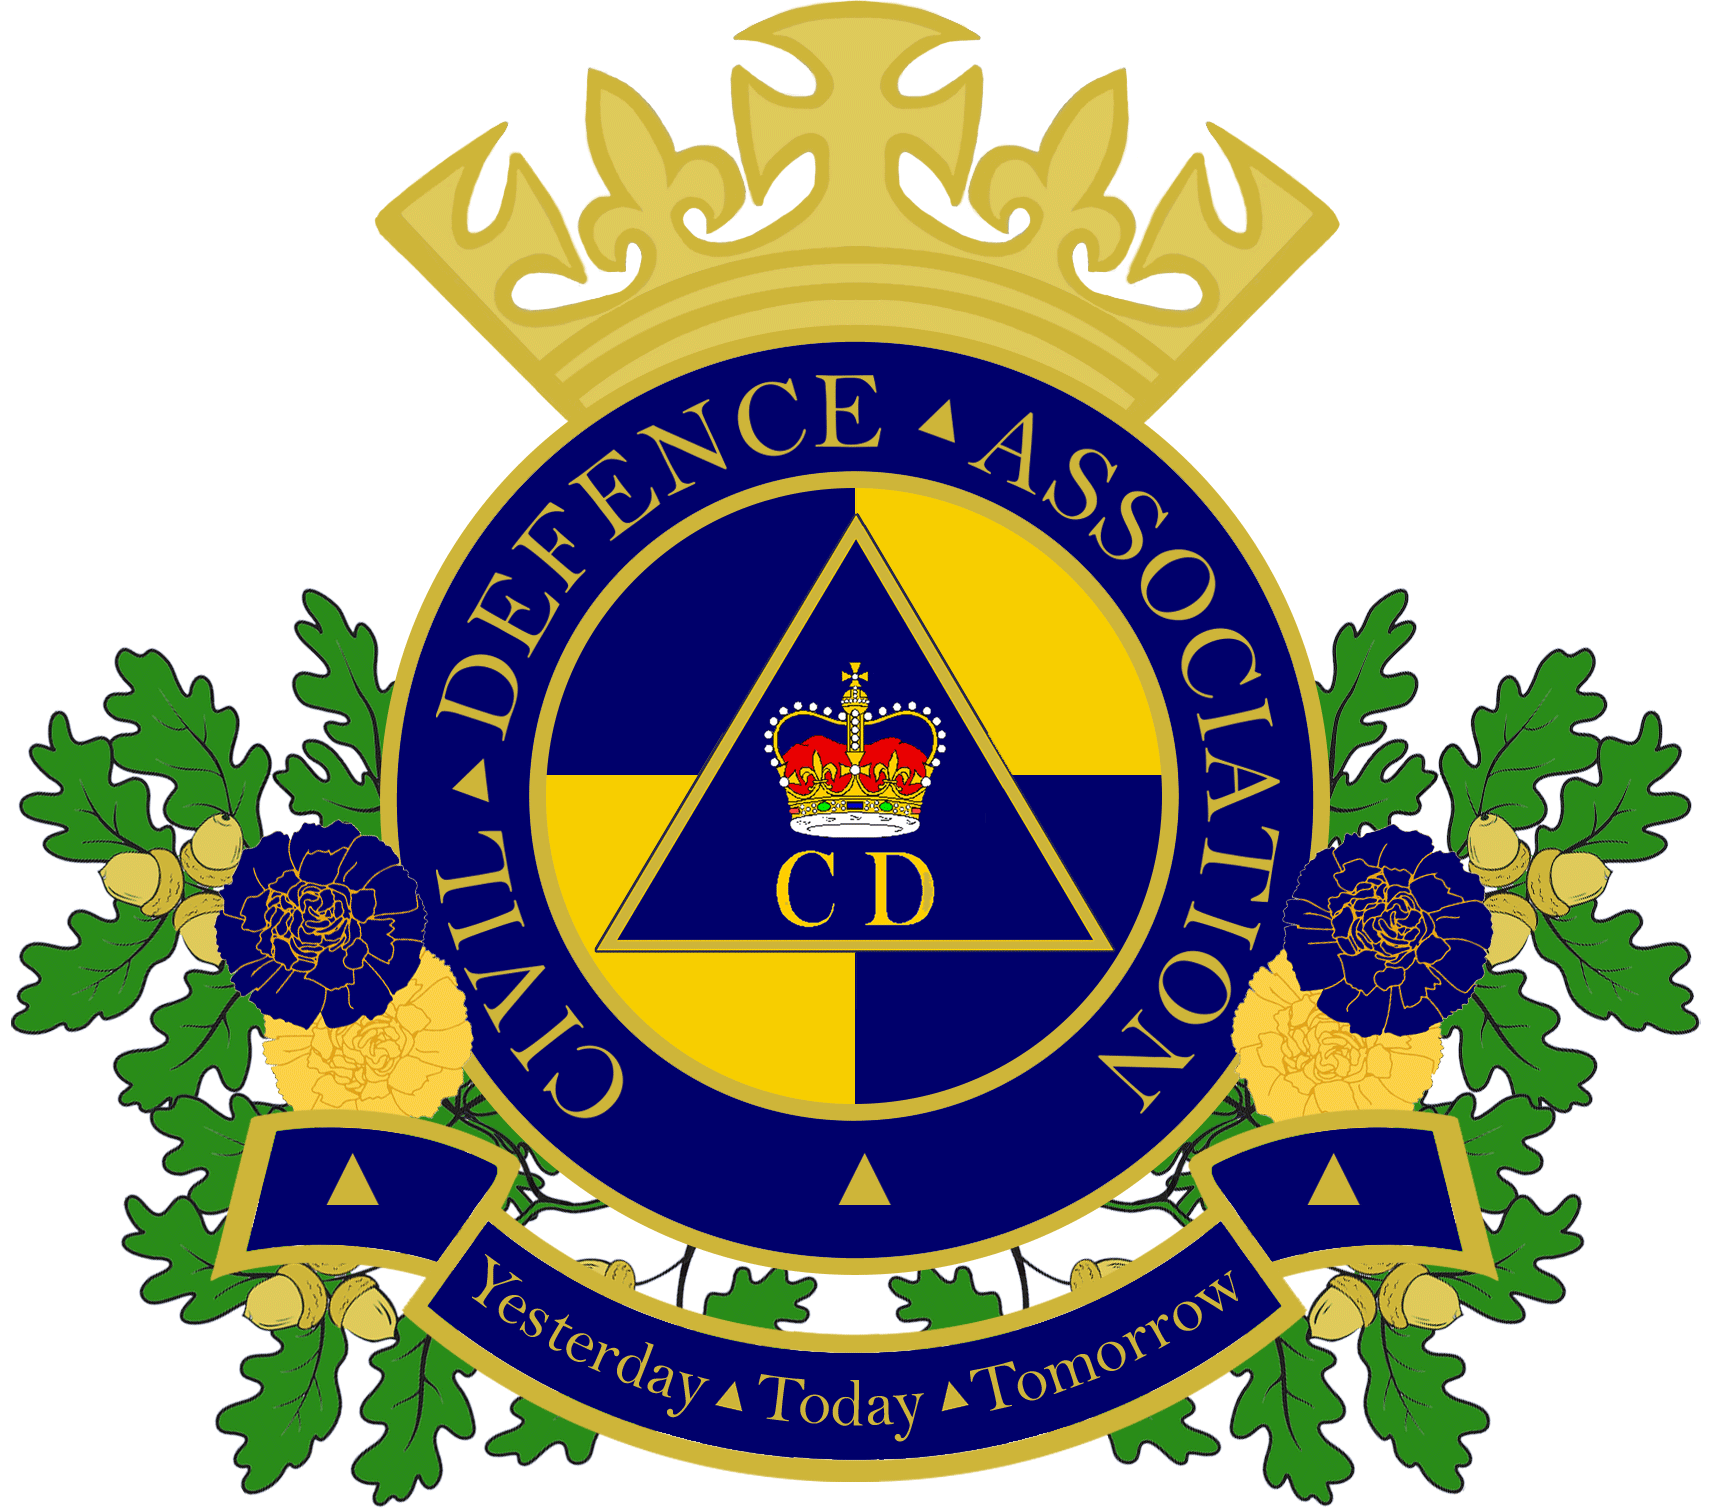 Civil Defence Association